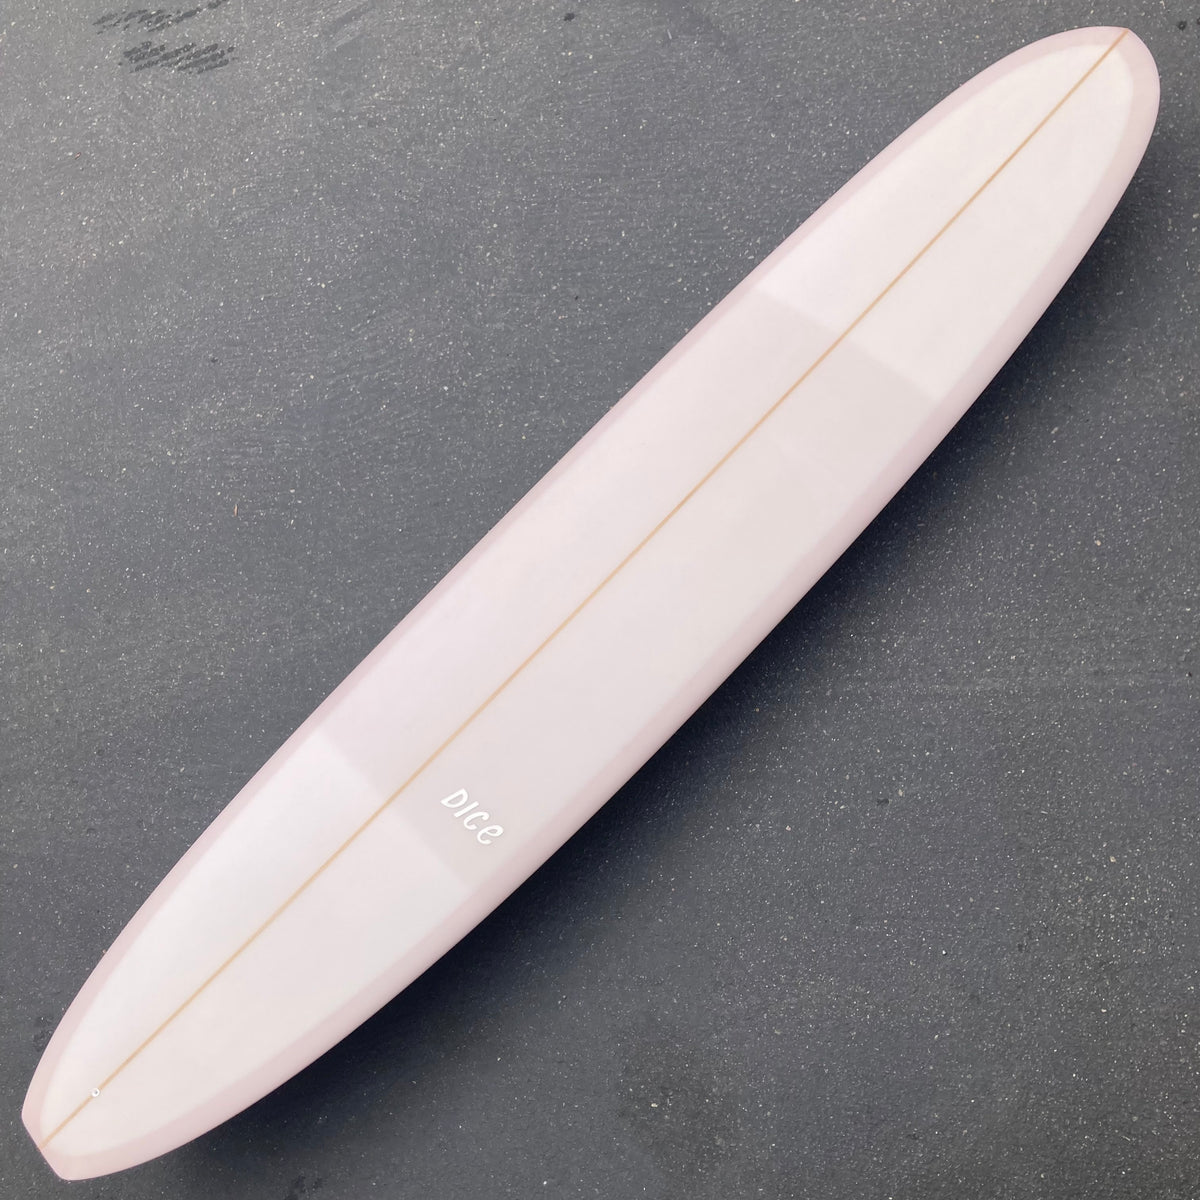 Dice Surfboards Log 9'5 shaped by Tom Morat